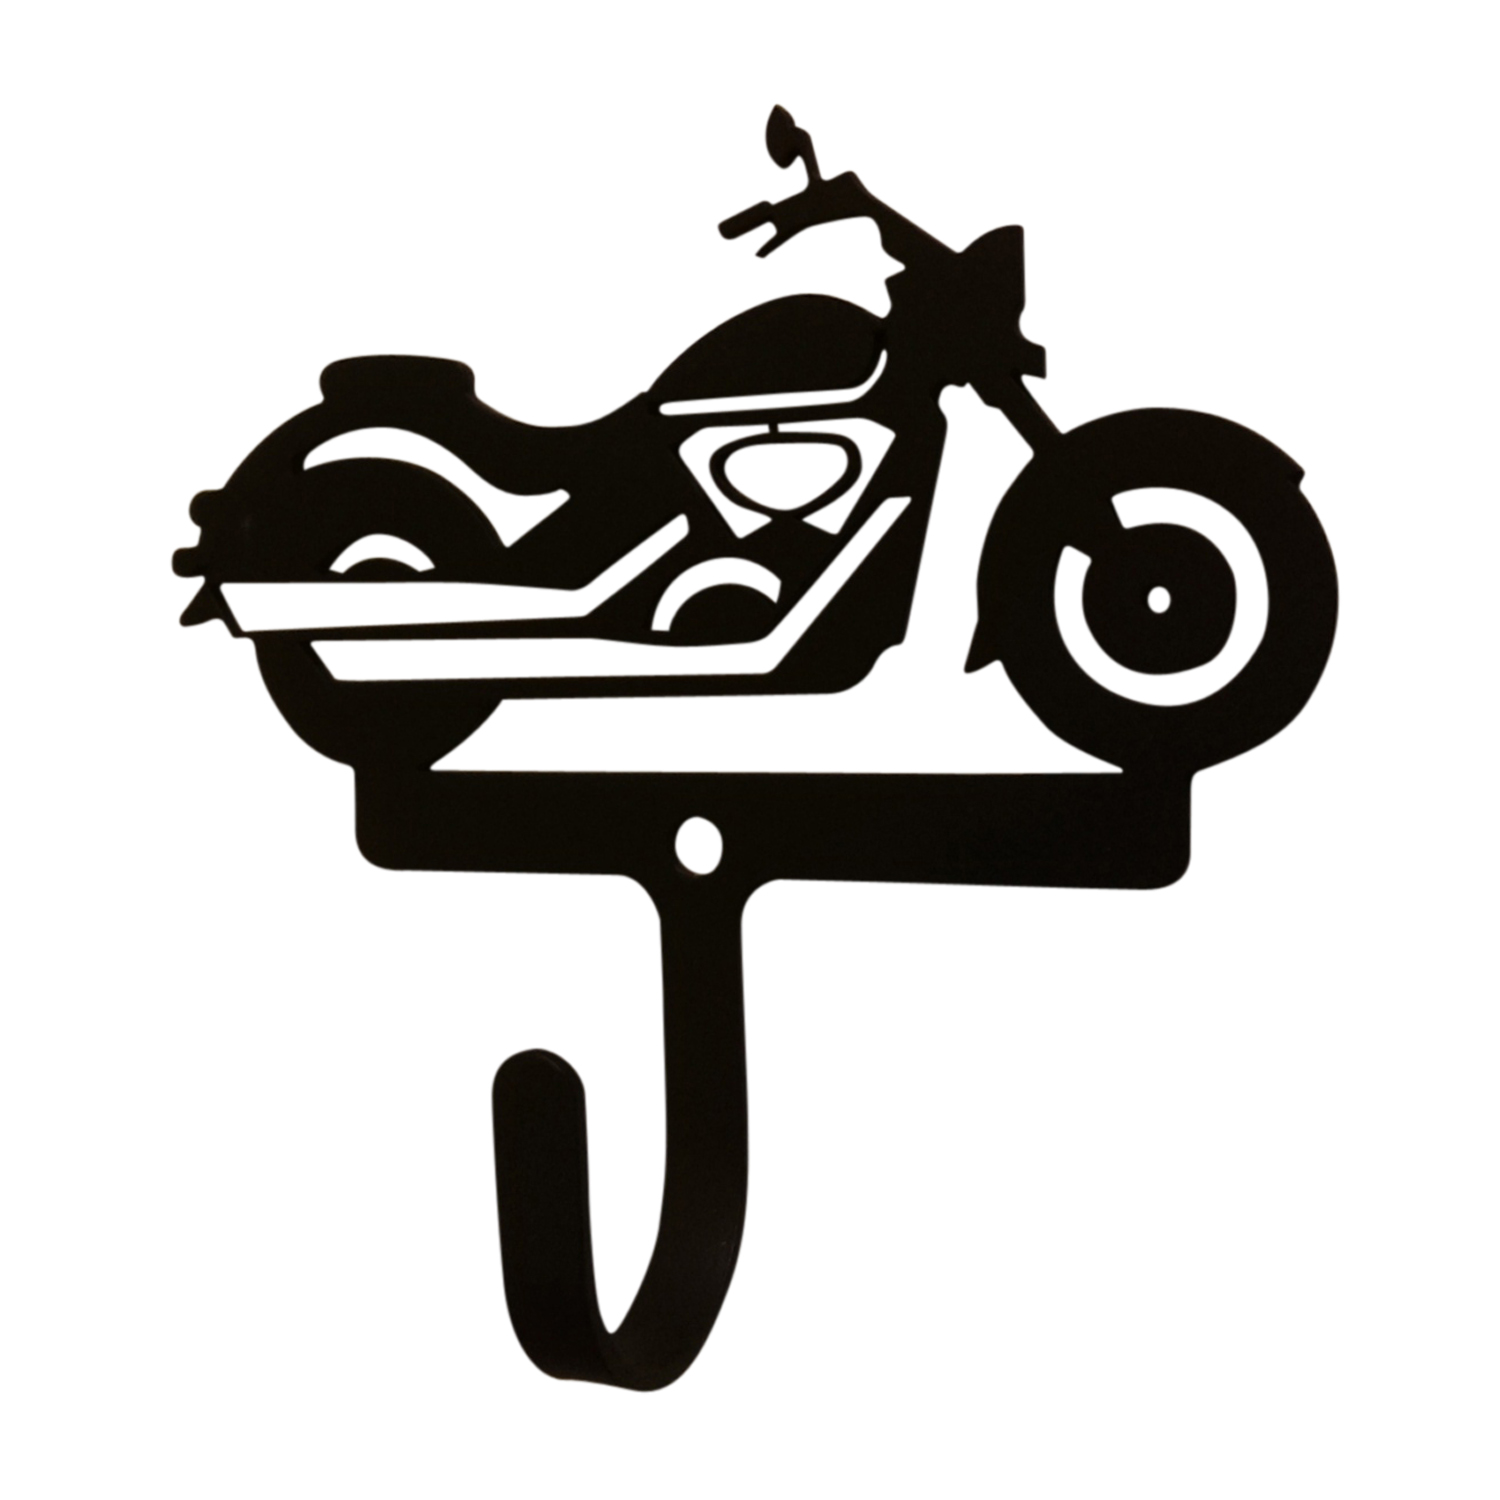 NEW - Motorcycle-Cruiser Sty